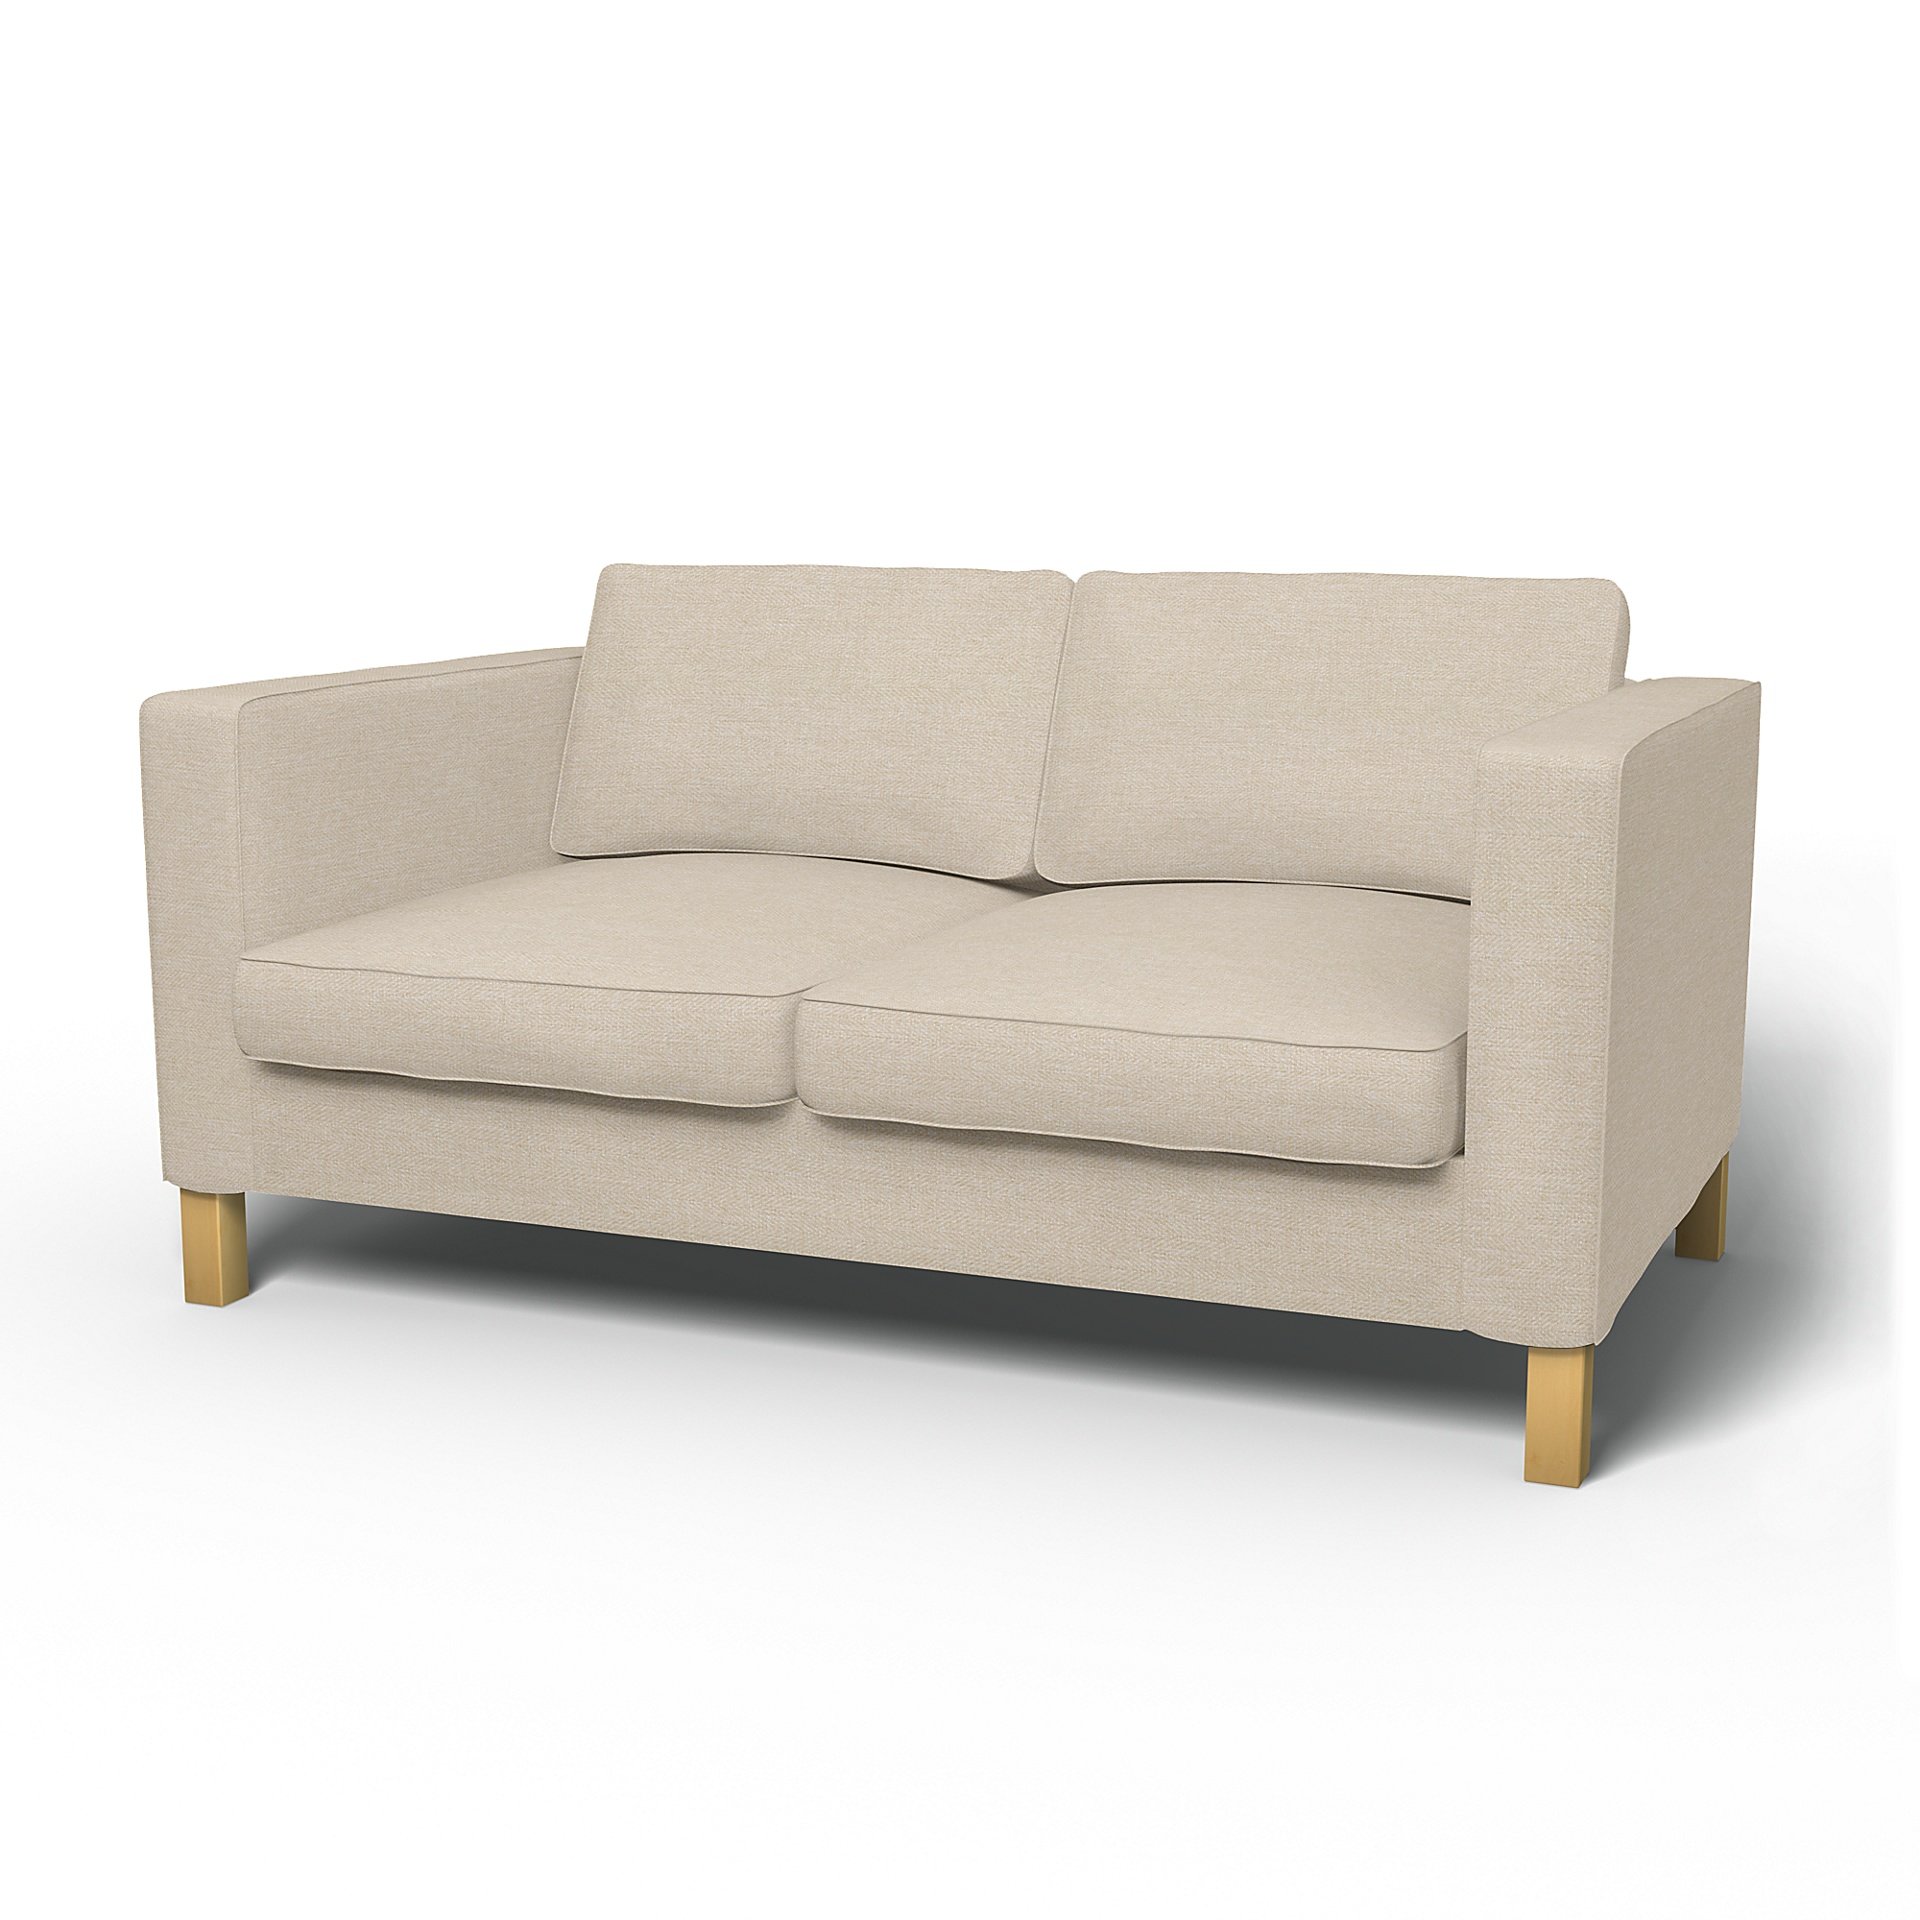 IKEA - Karlanda 2 Seater Sofa Cover, Natural, Boucle & Texture - Bemz